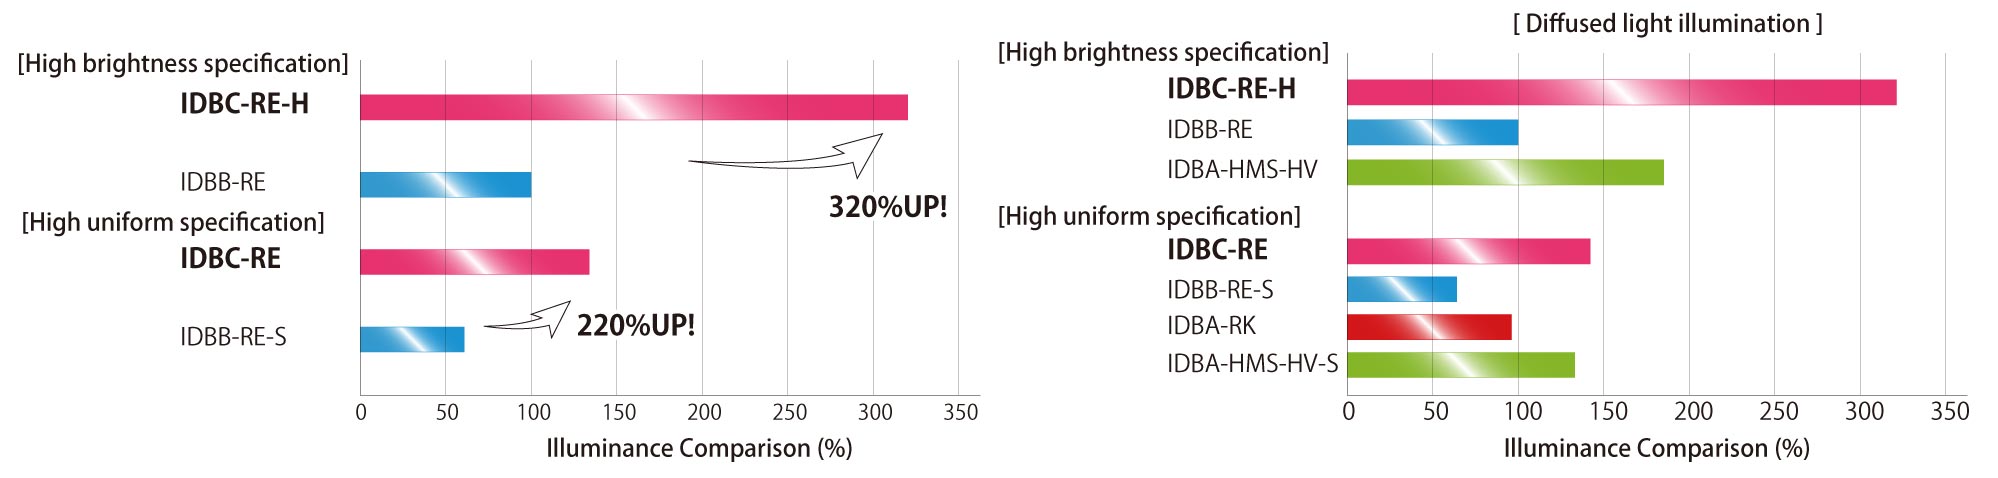 IDBC-RE Product Description 01